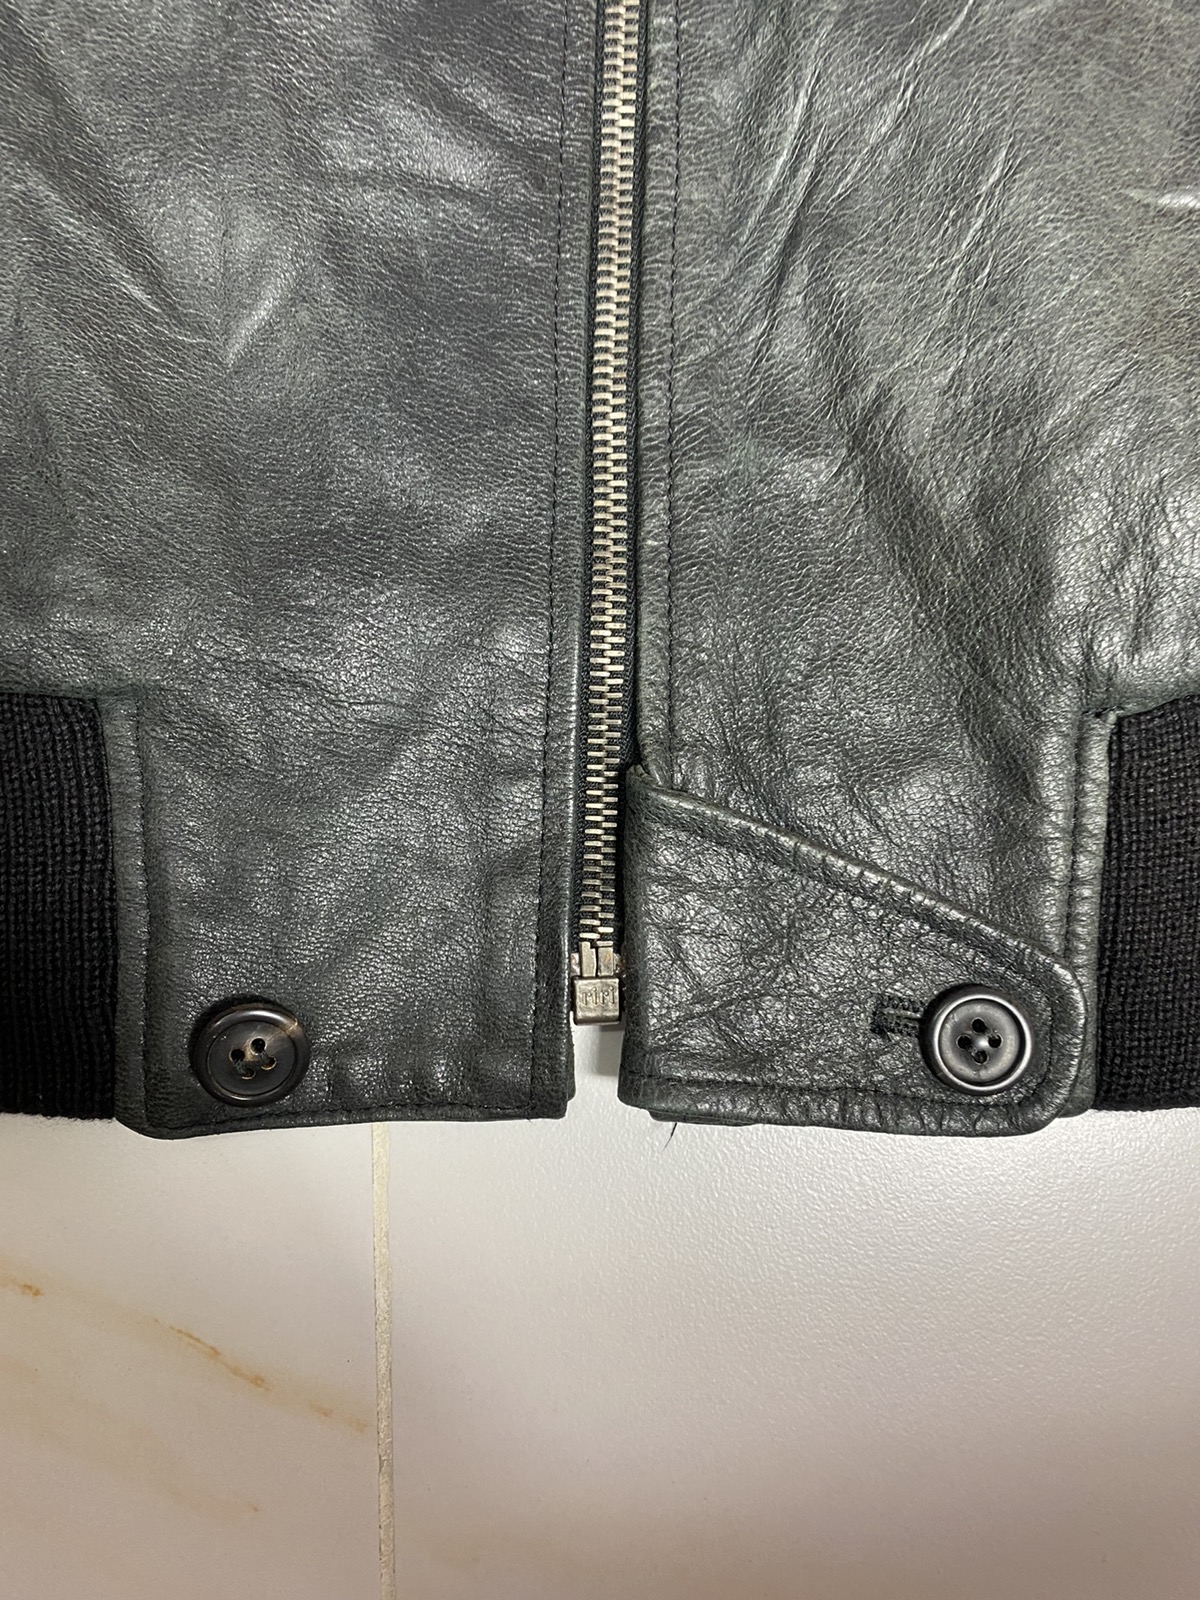 Maison Margiela A/W 2001-02 Leather Zipped Vest. J072 - 5